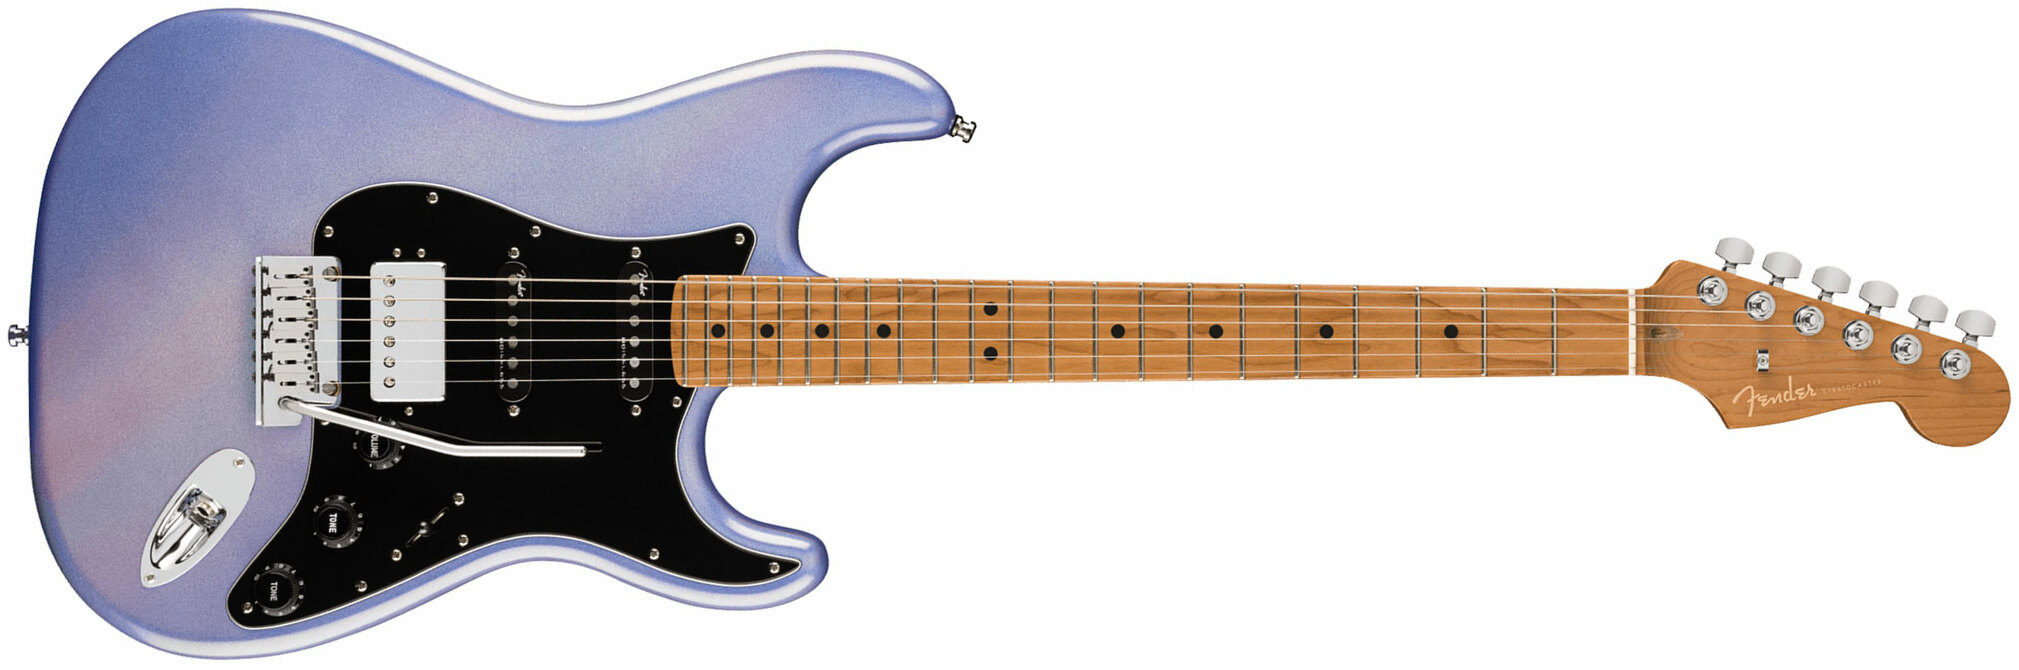 Fender Strat 70th Anniversary American Ultra Ltd Usa Hss Trem Mn - Amethyst - Guitare Électrique Forme Str - Main picture